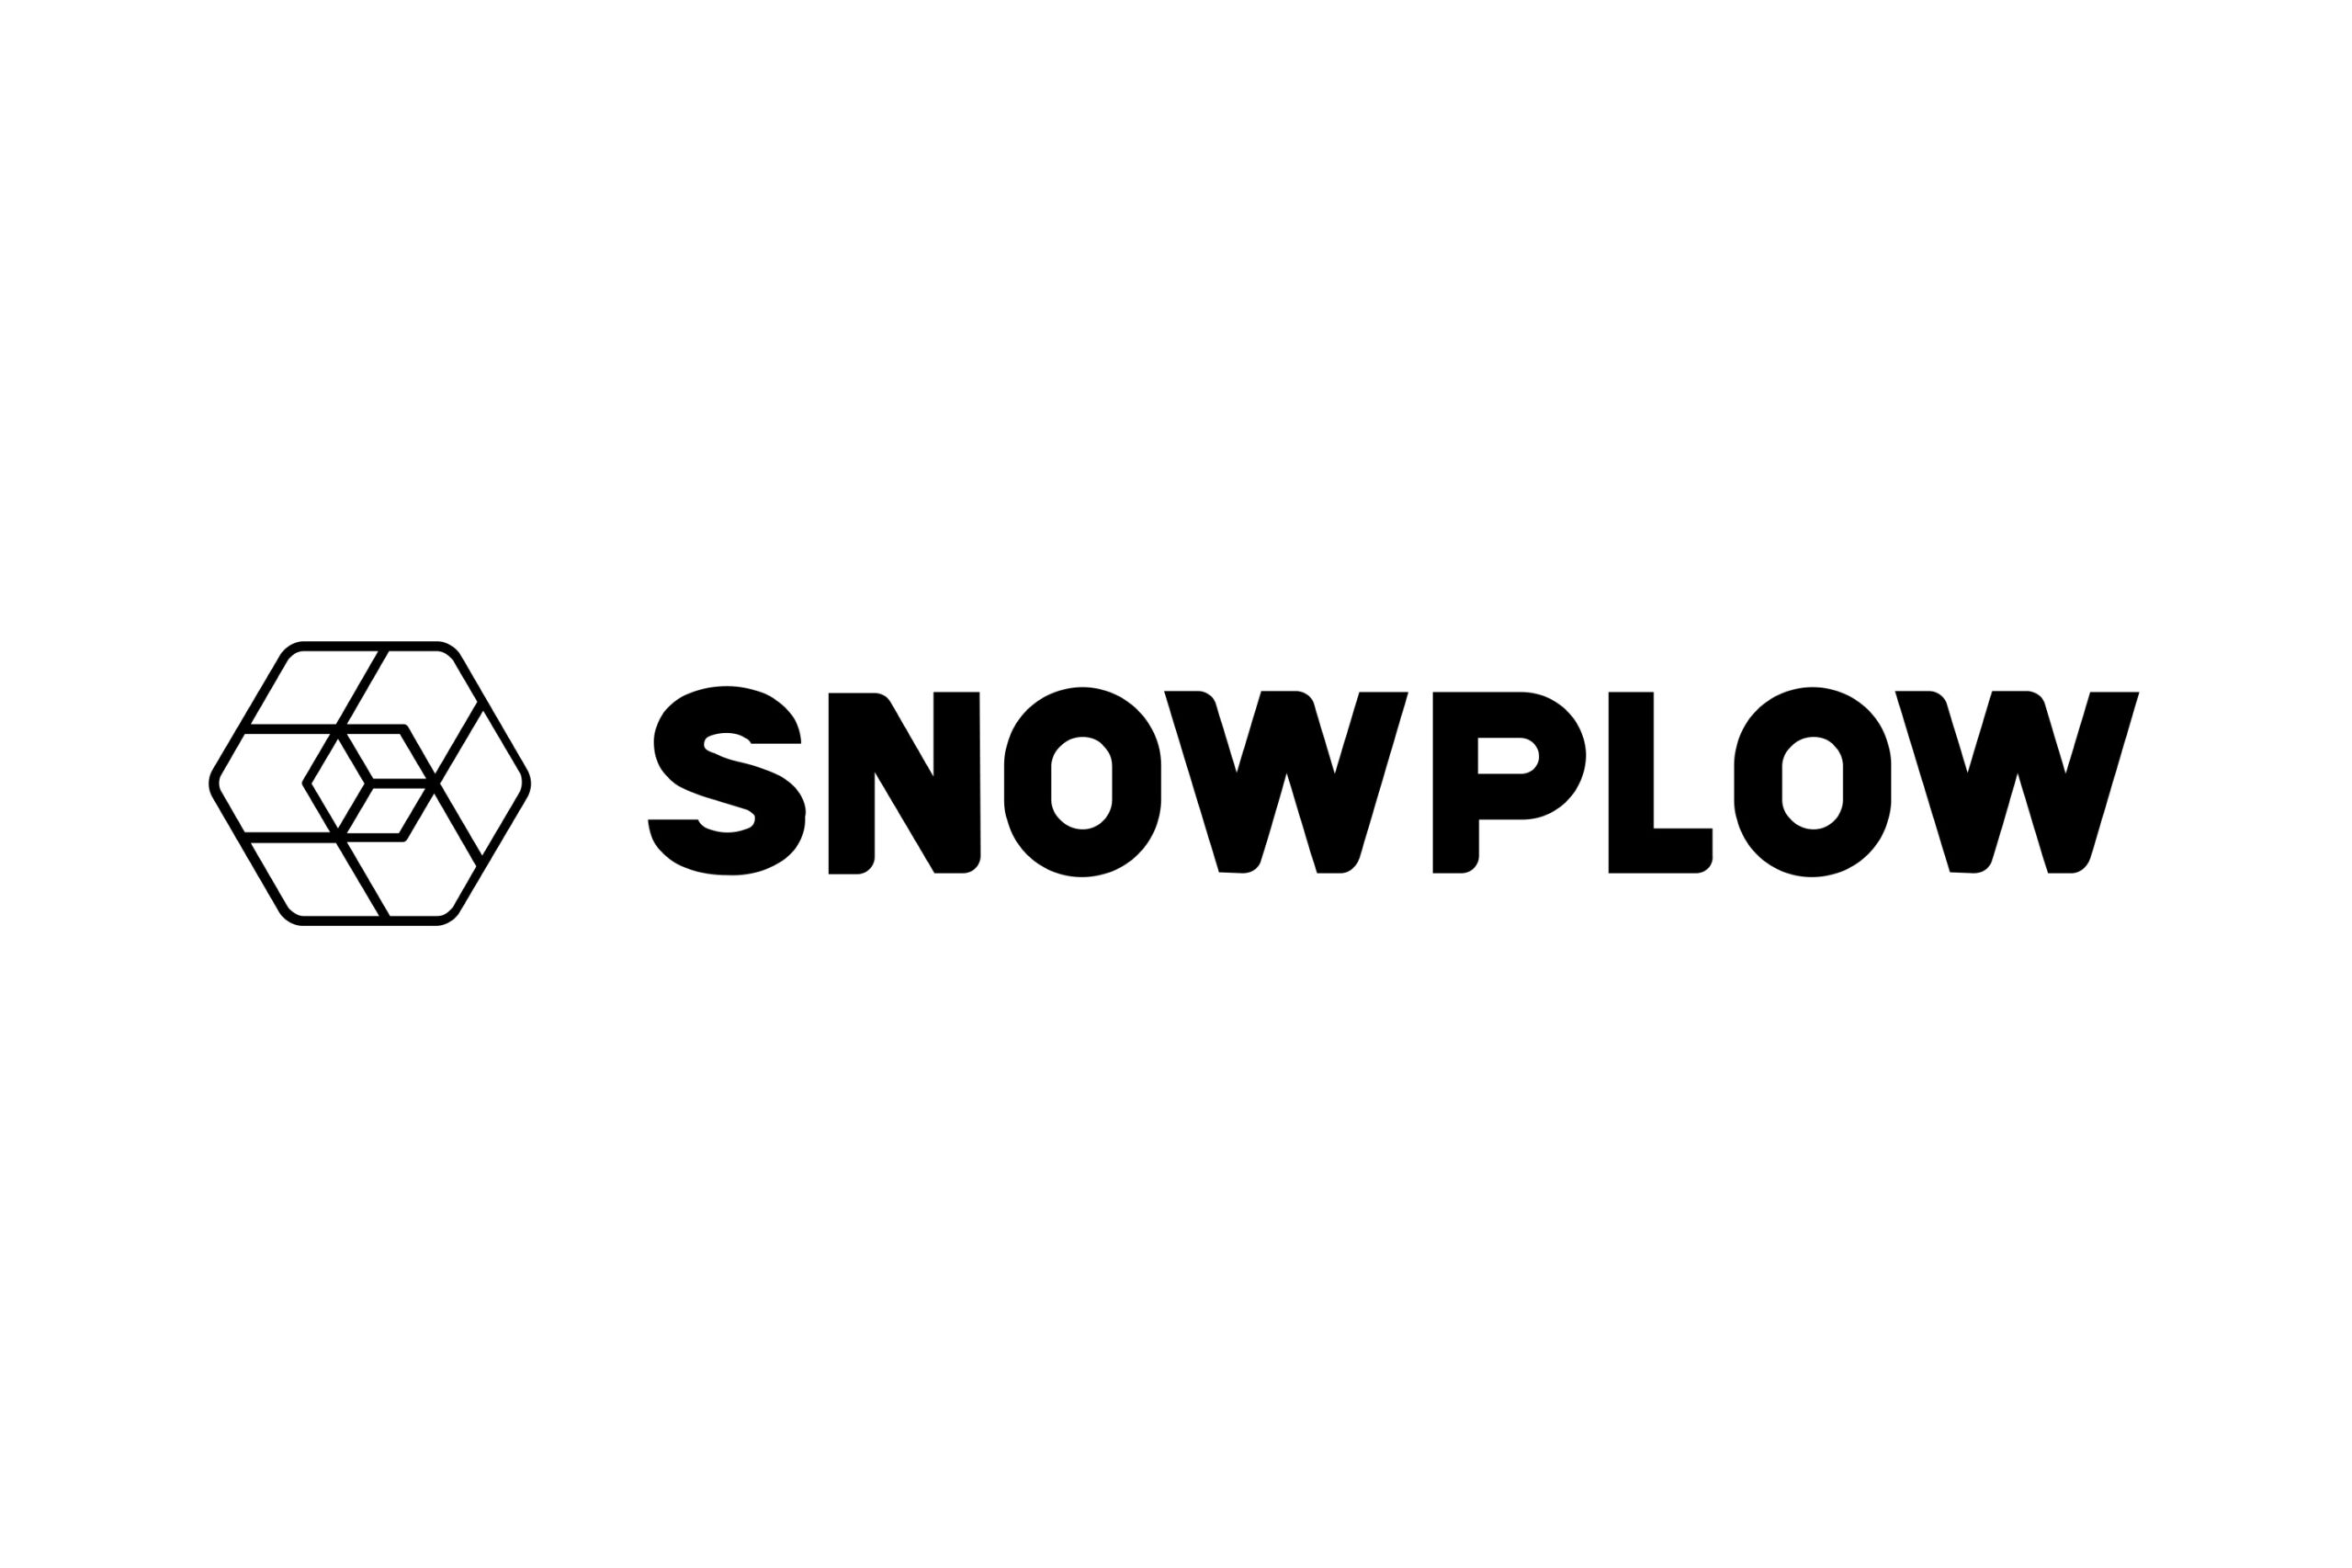 Snowplow Analytics brand positioning intro logo